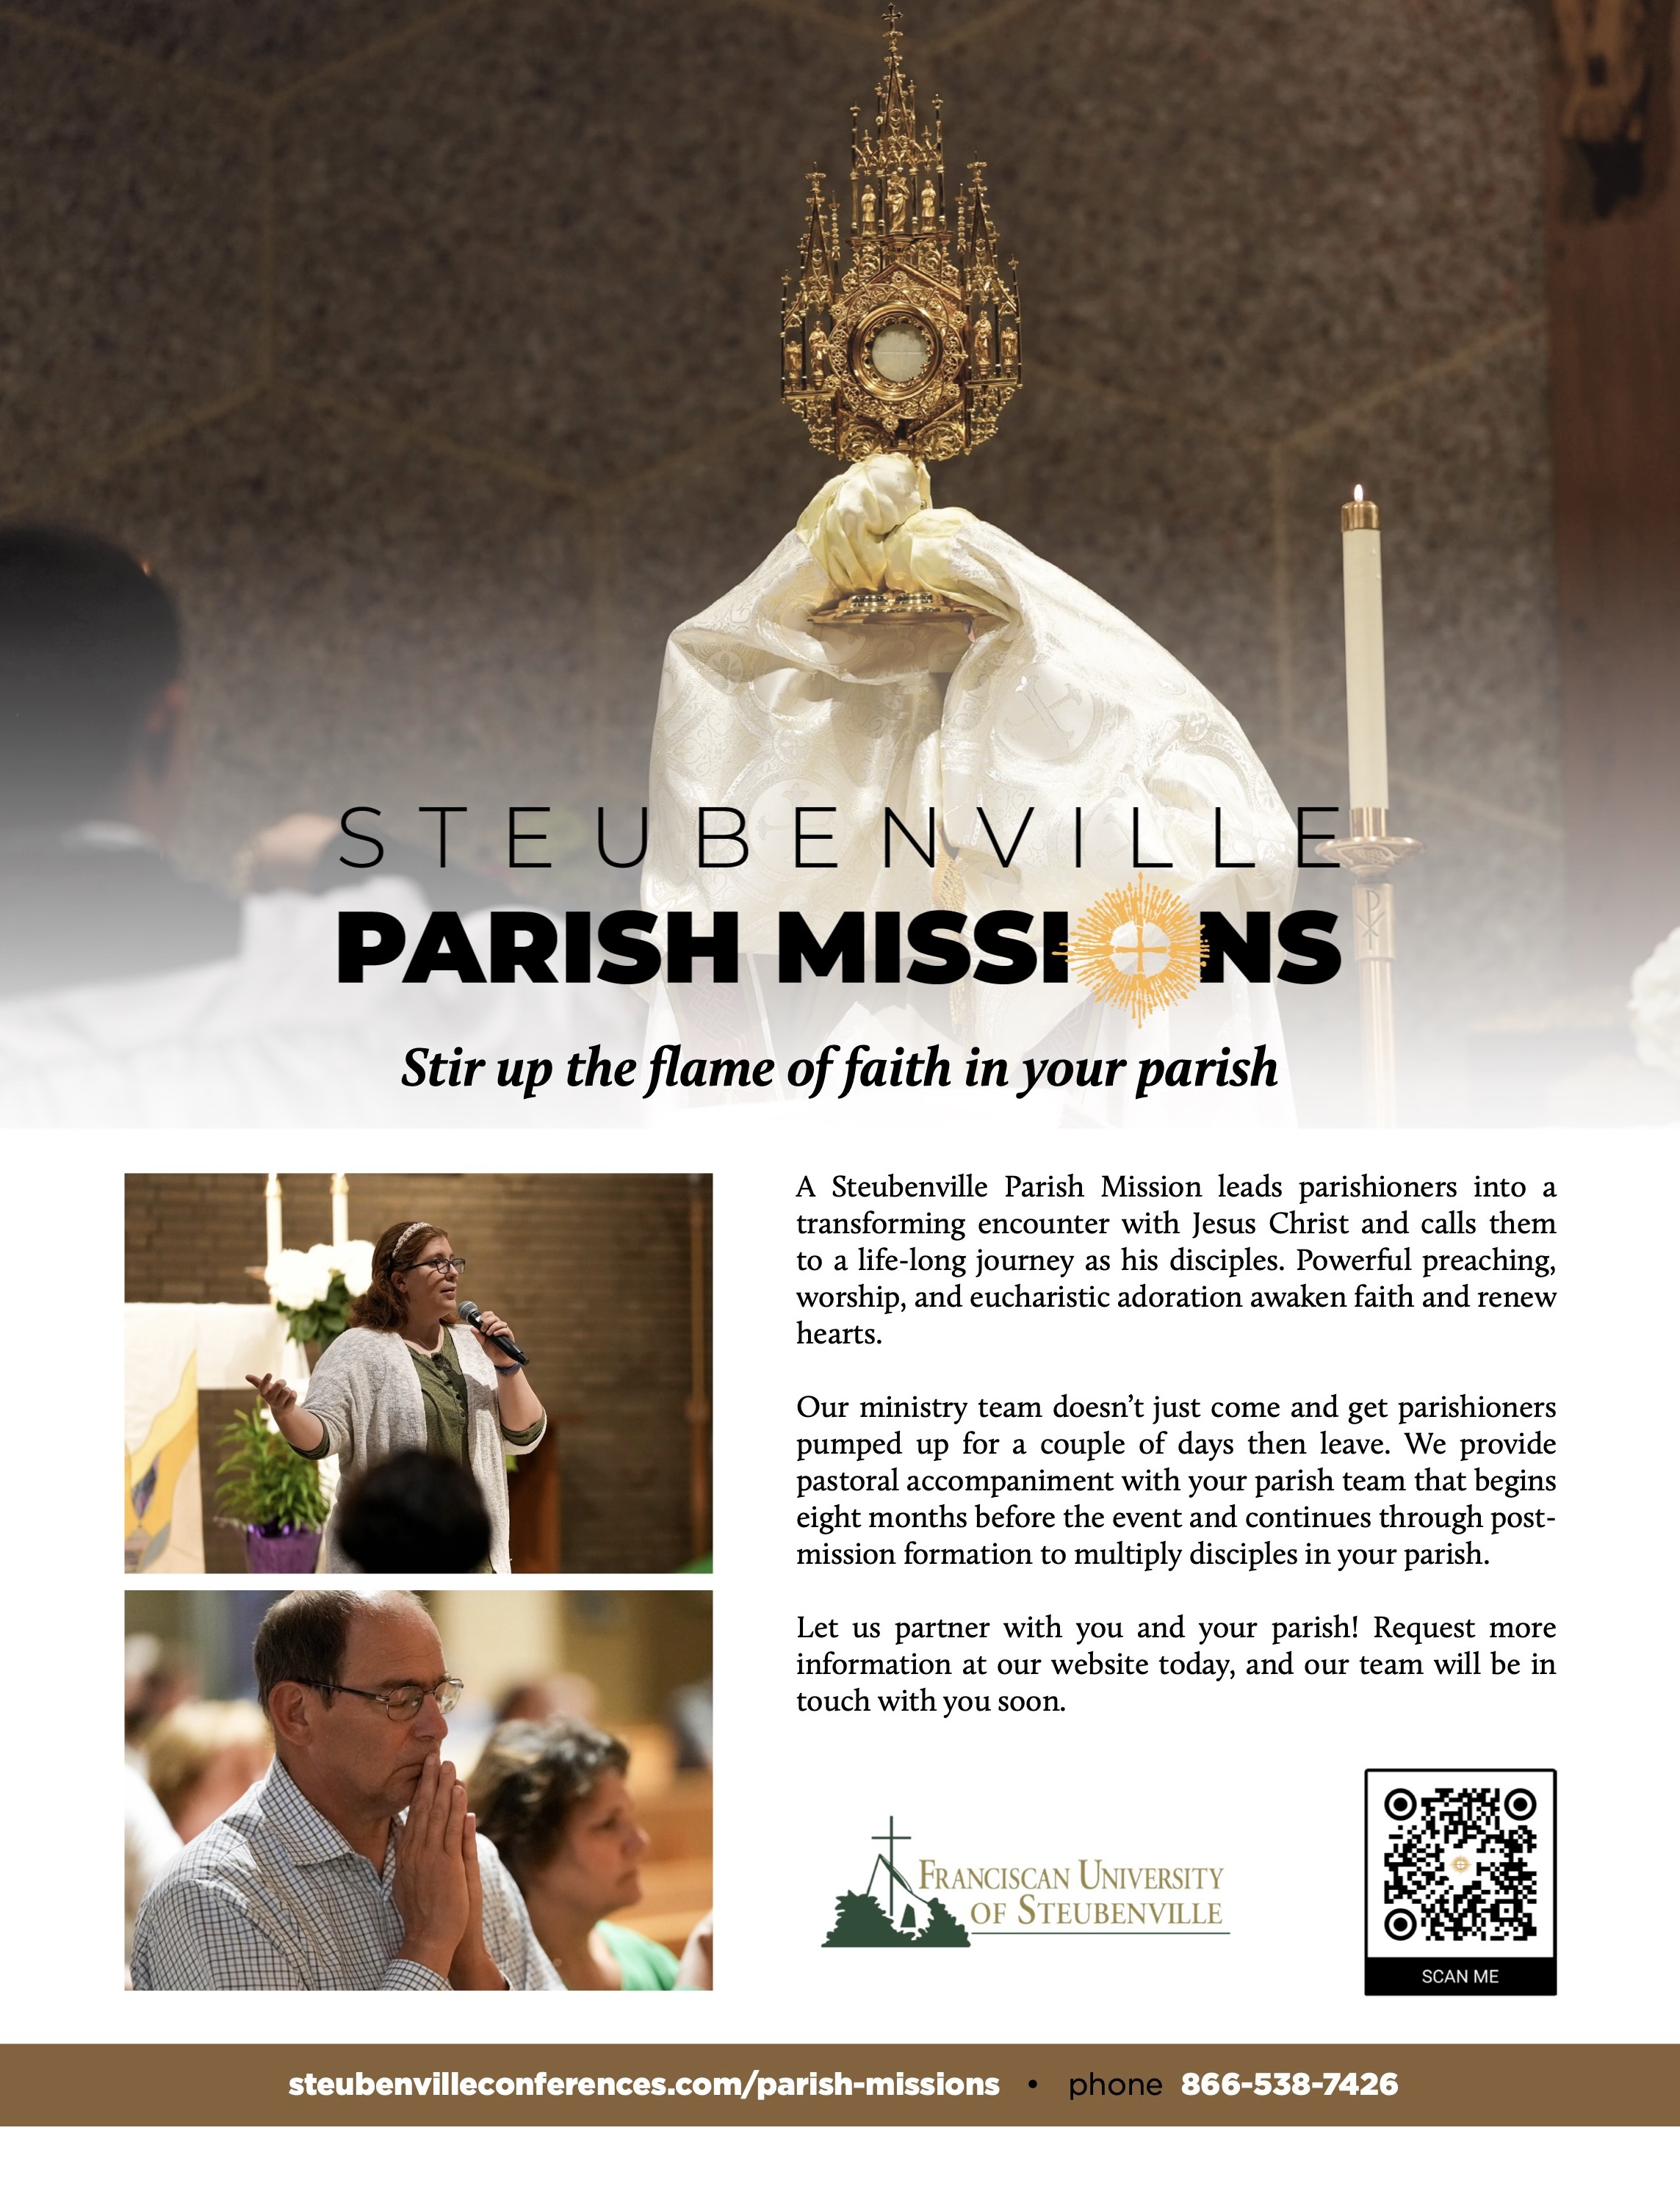 ad for Steubenville parish missions